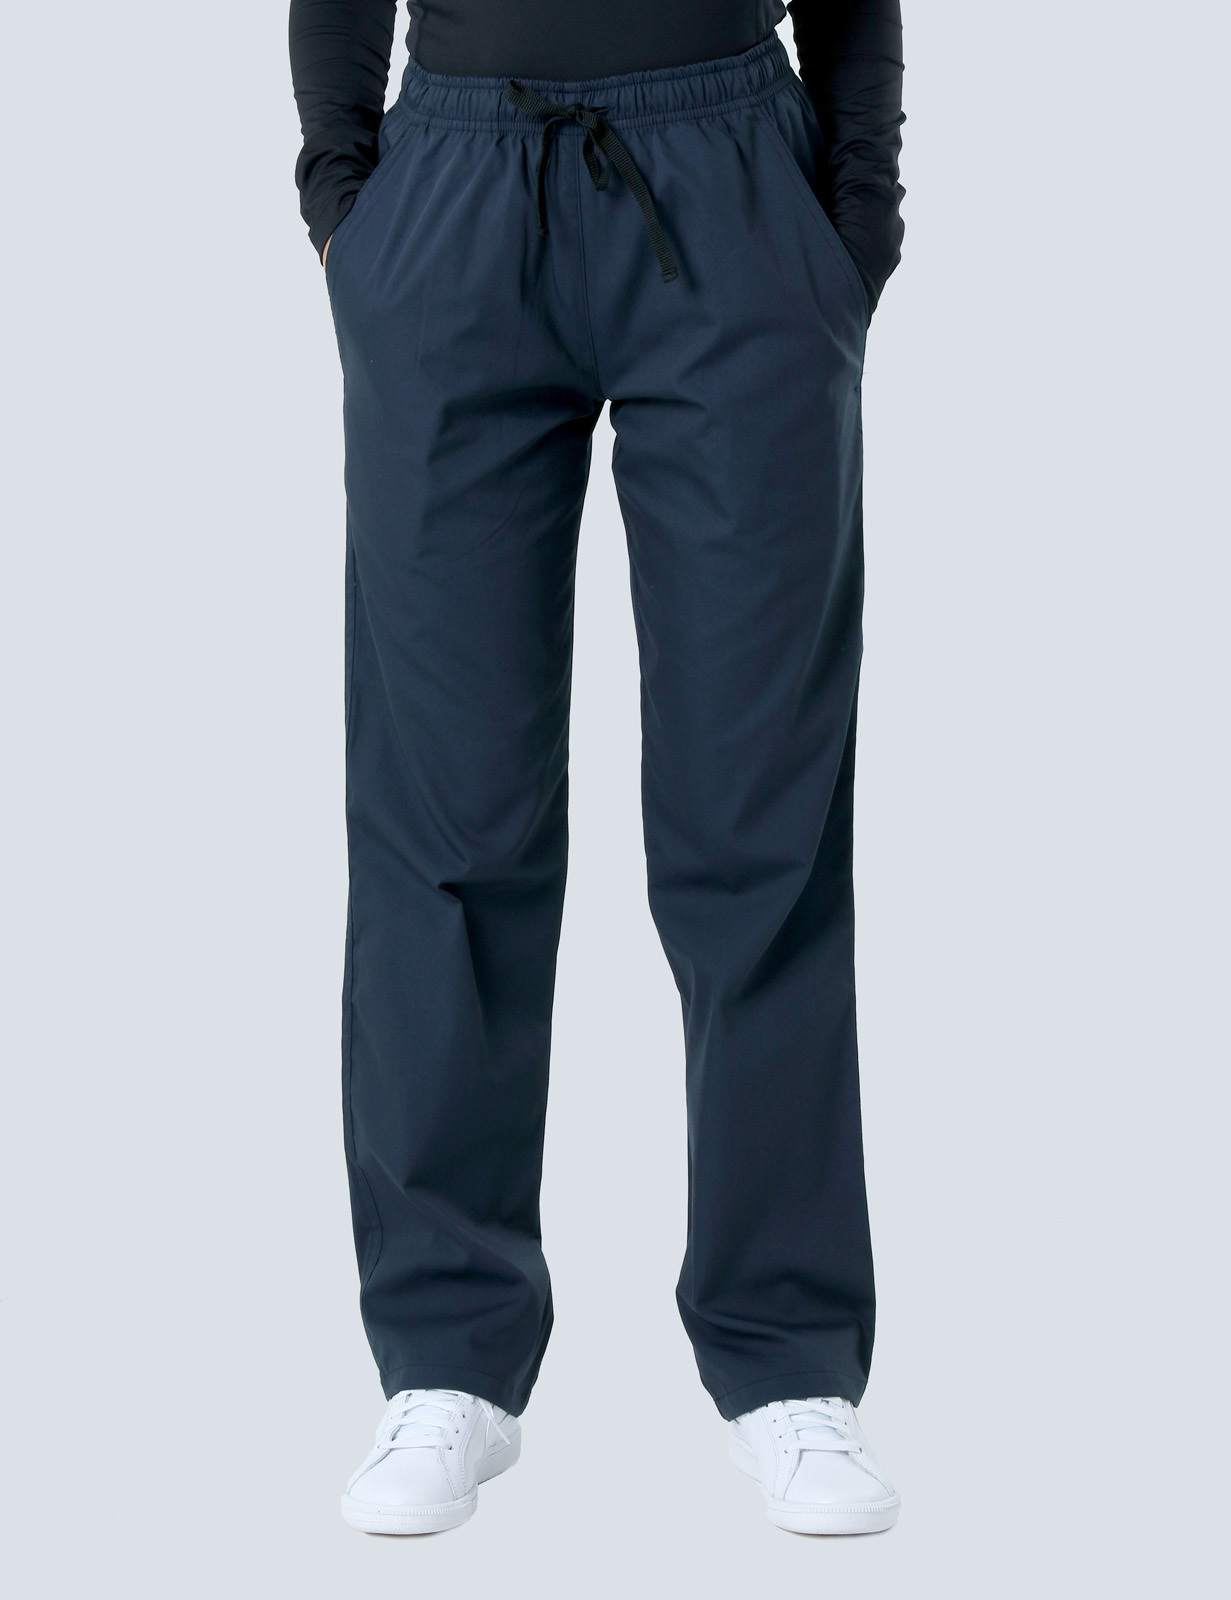 Women's Regular Cut Pants - Navy - 4X large